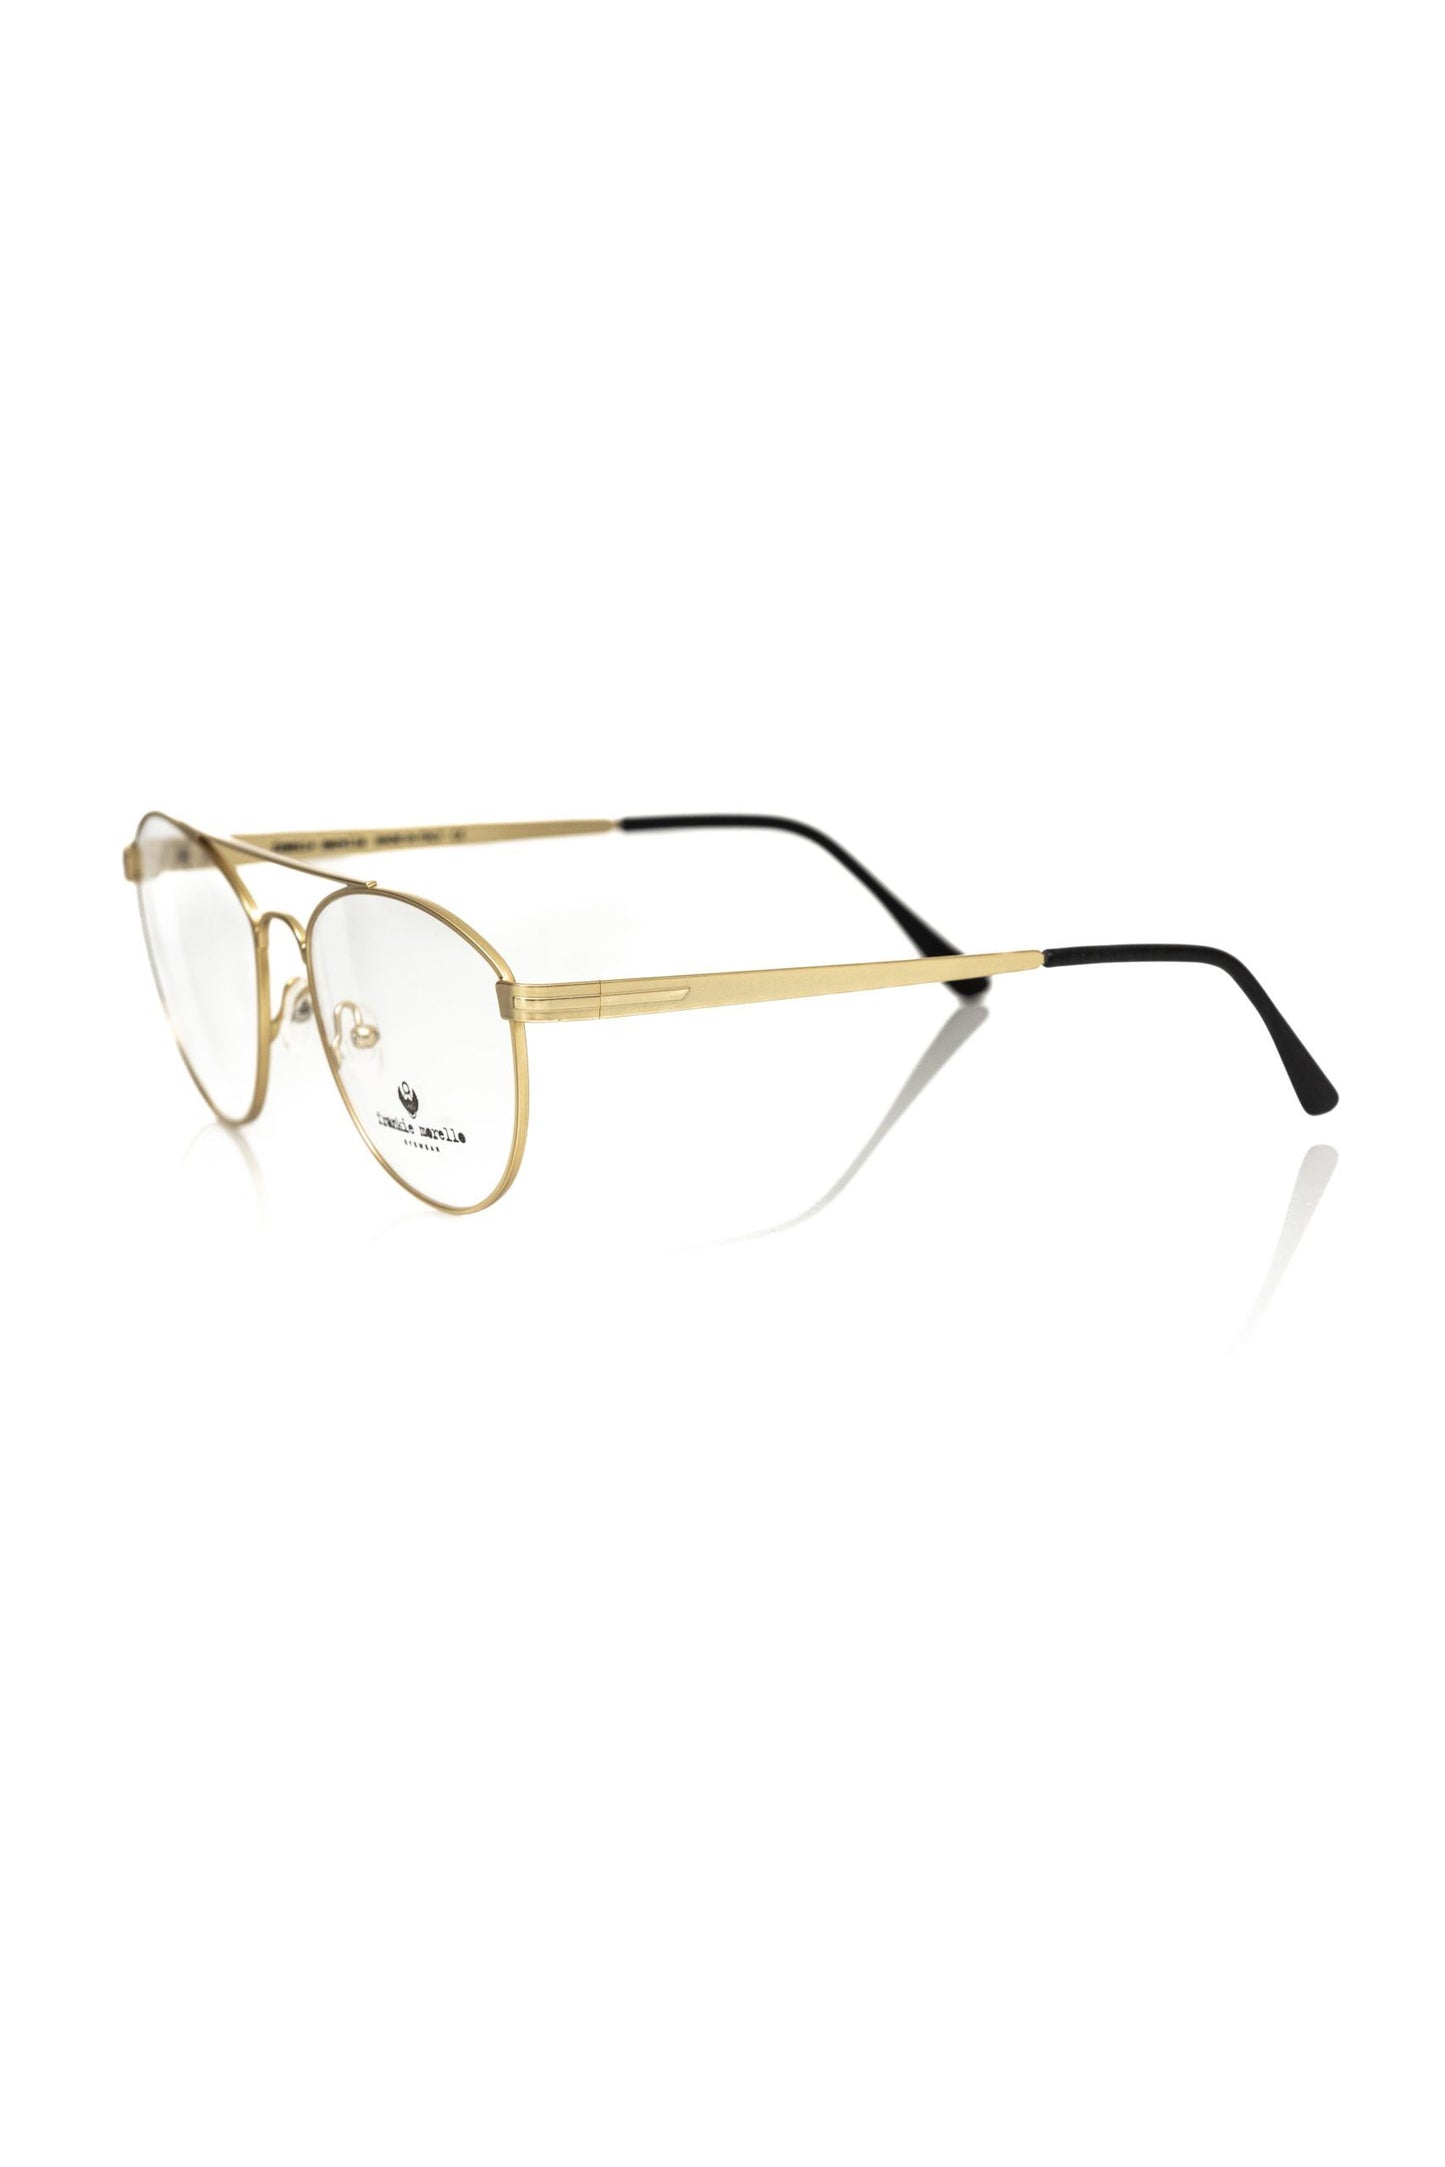 Aviator Style Metallic Frame Eyeglasses